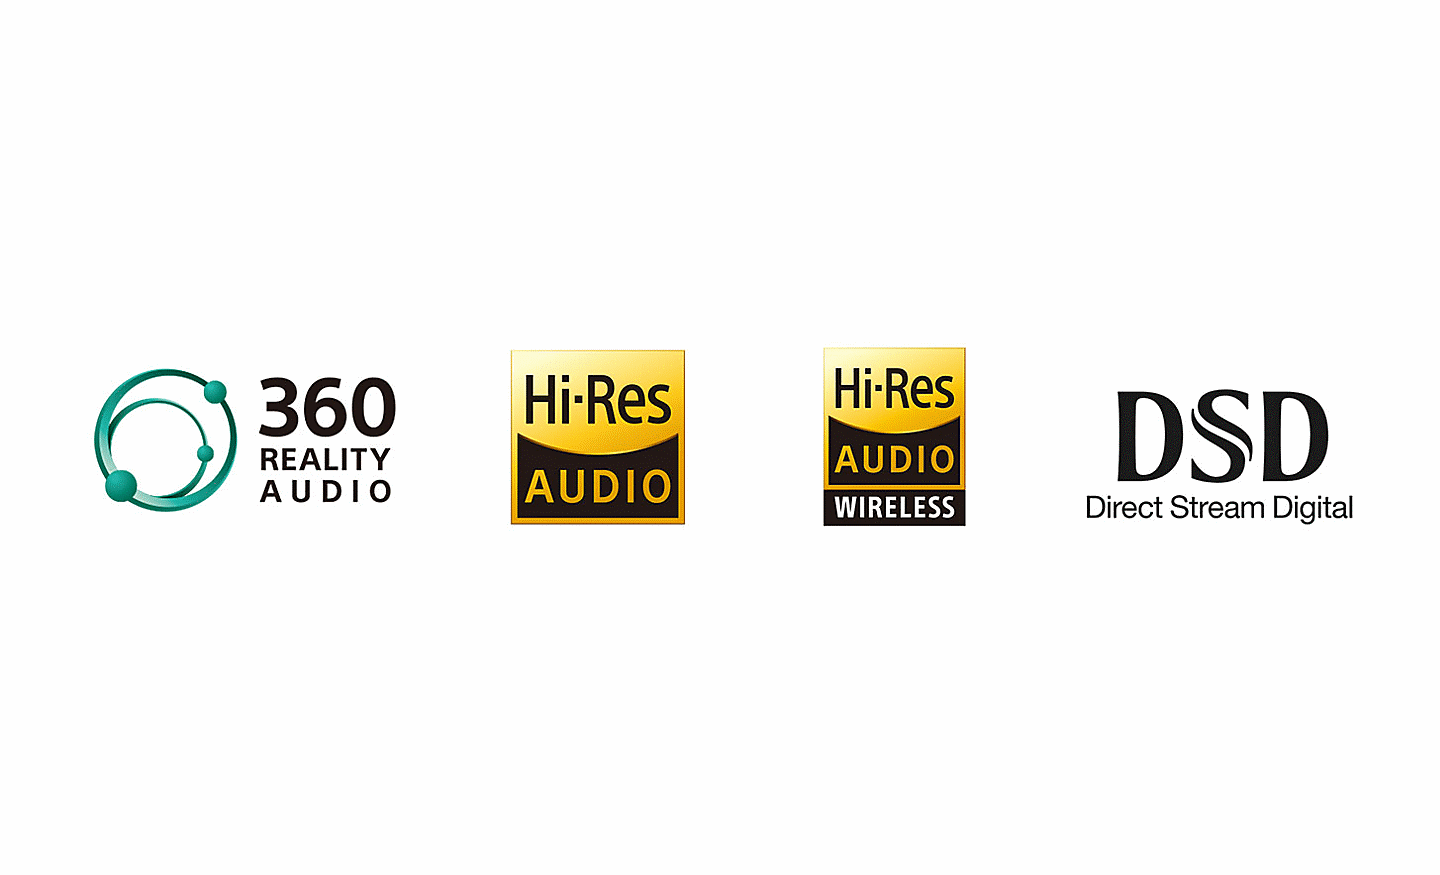 Logos 360 Reality Audio, Hi-Res Audio, Hi-Res Audio sans fil et DSD Direct Stream Digital